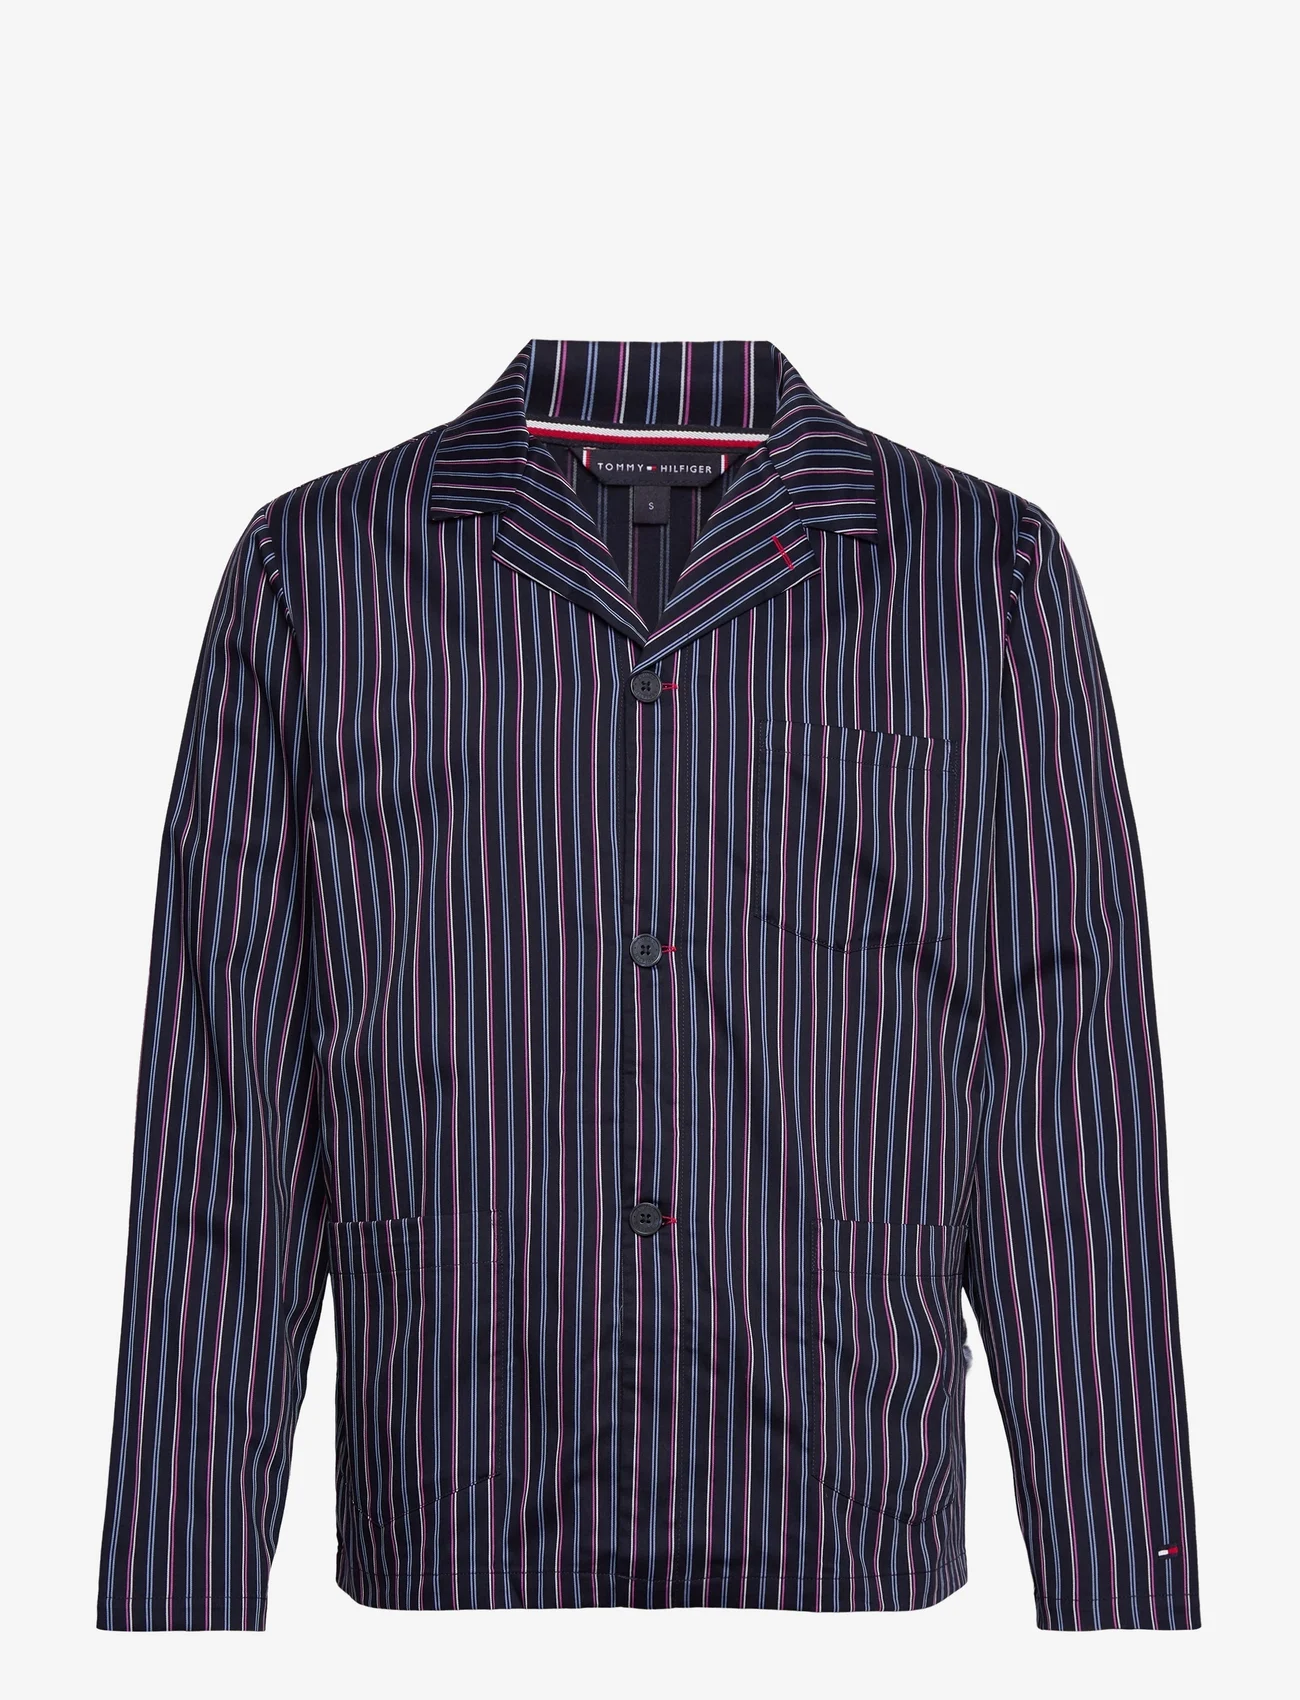 Tommy Hilfiger - LS PJ SHIRT - pyjama tops - dress stripe vertical - 0